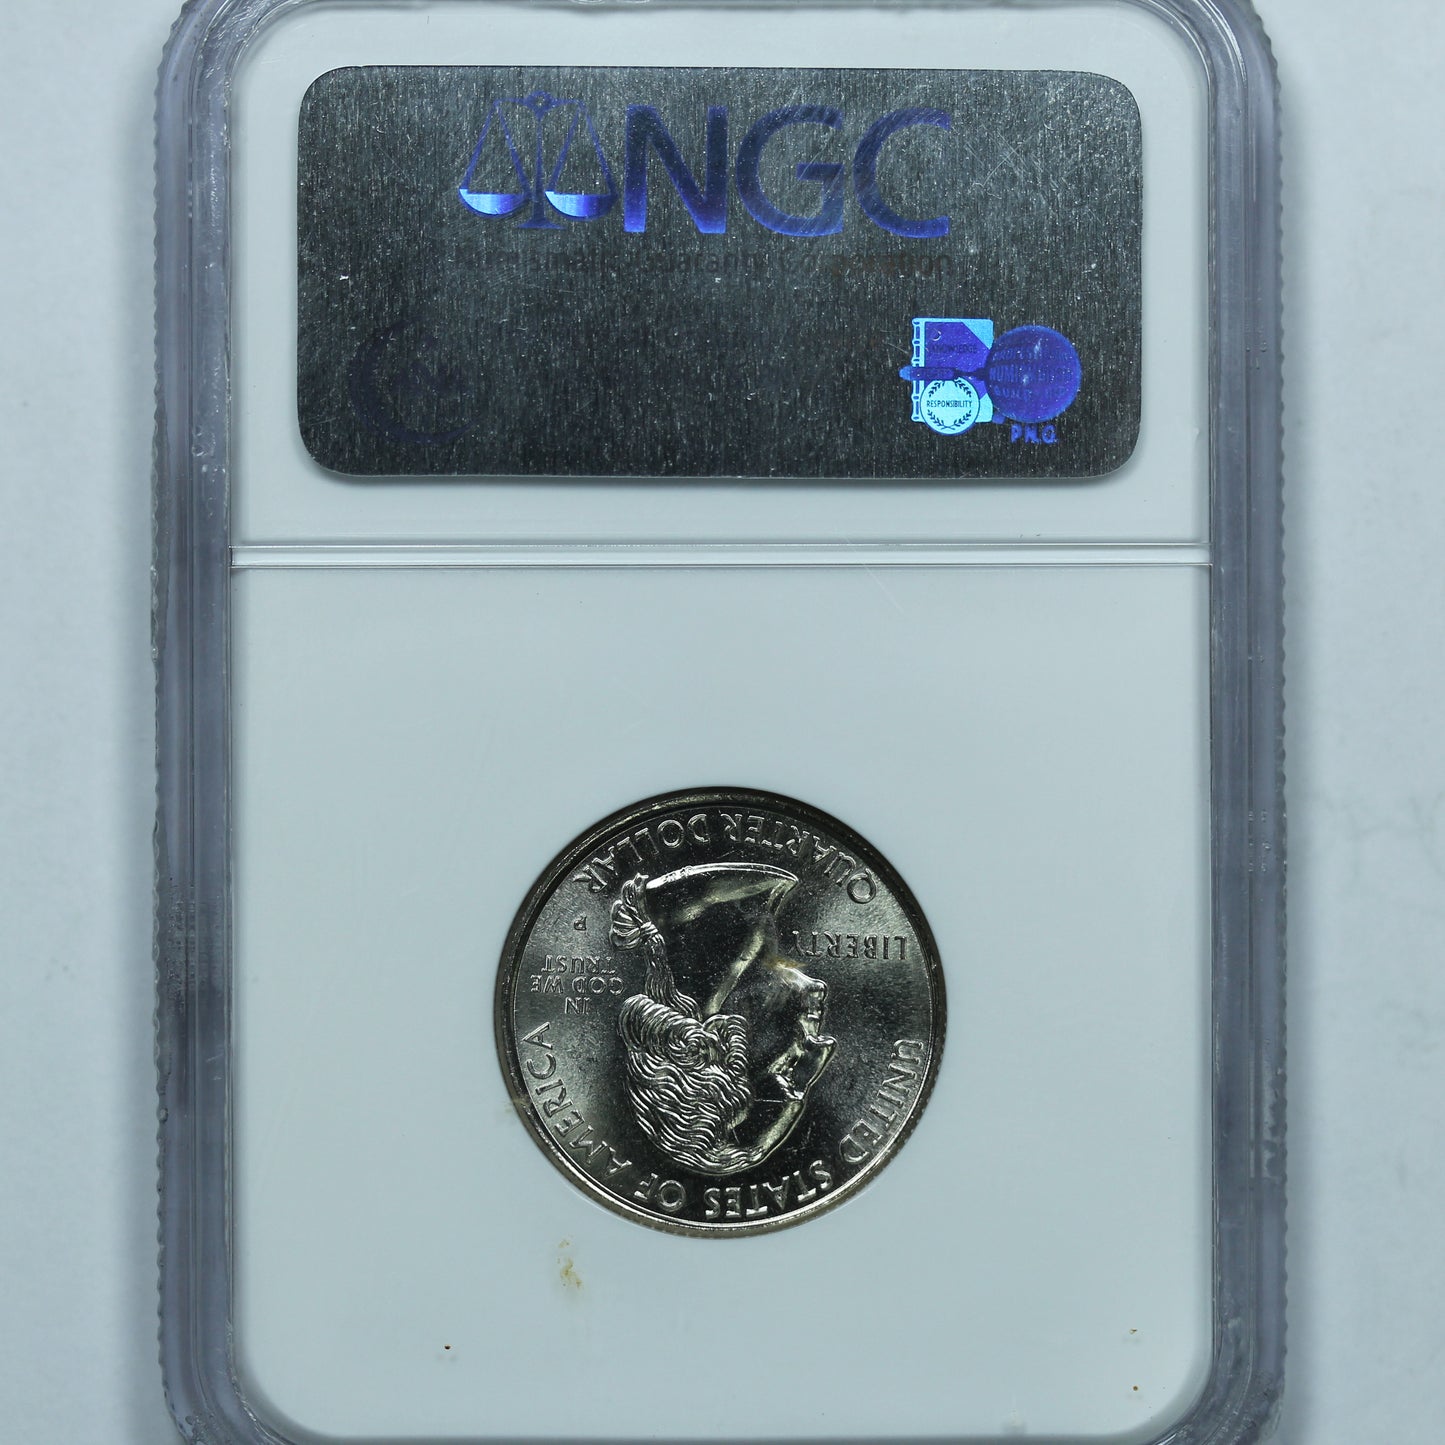 1999 P 25c Connecticut Quarter - NGC MS 66